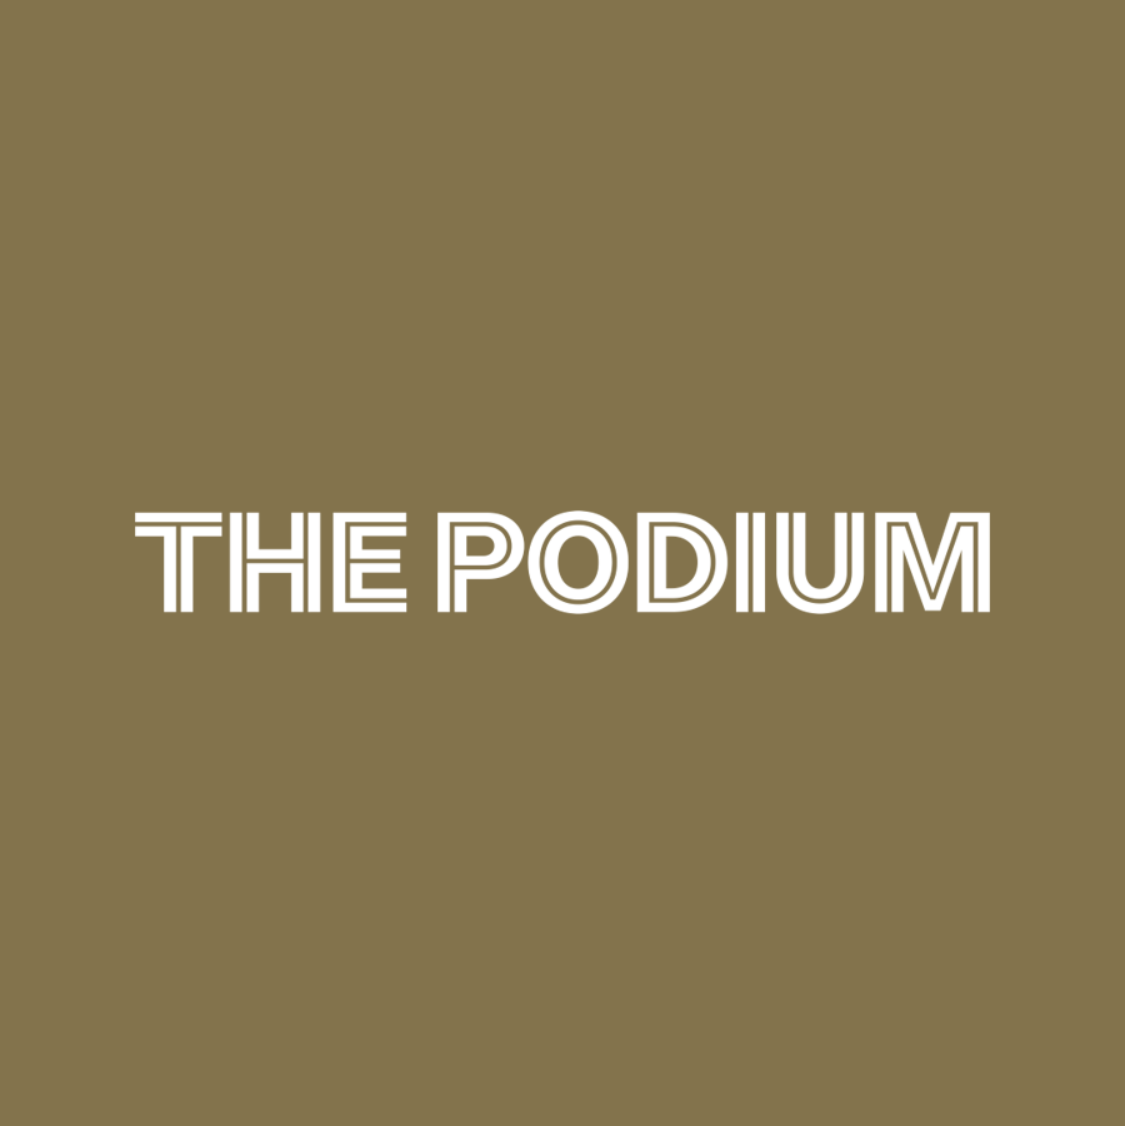 The Podium